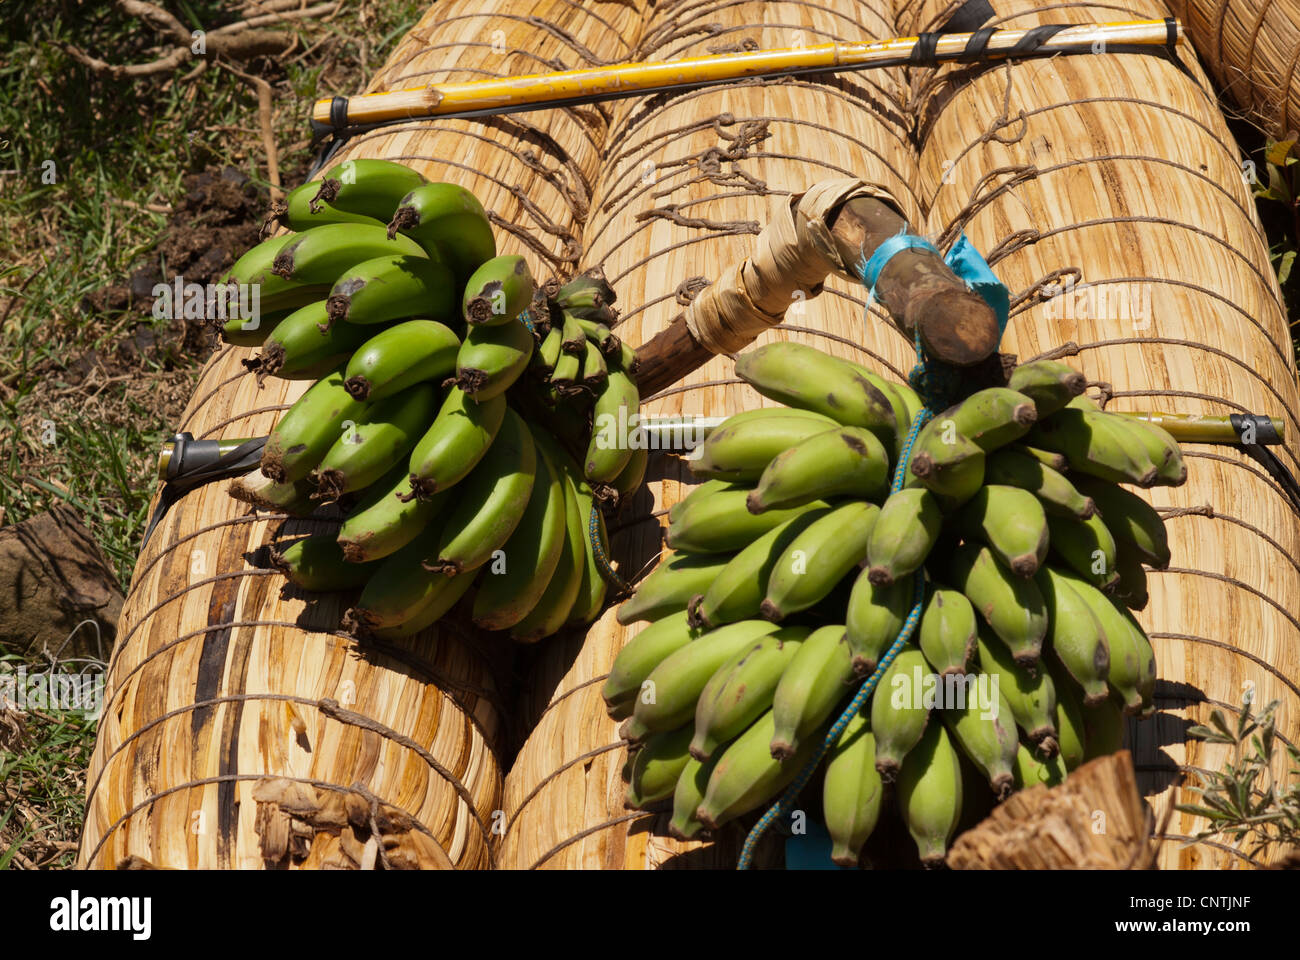 Bunch of bananas on traditional canoe Easter Island Stock Photo